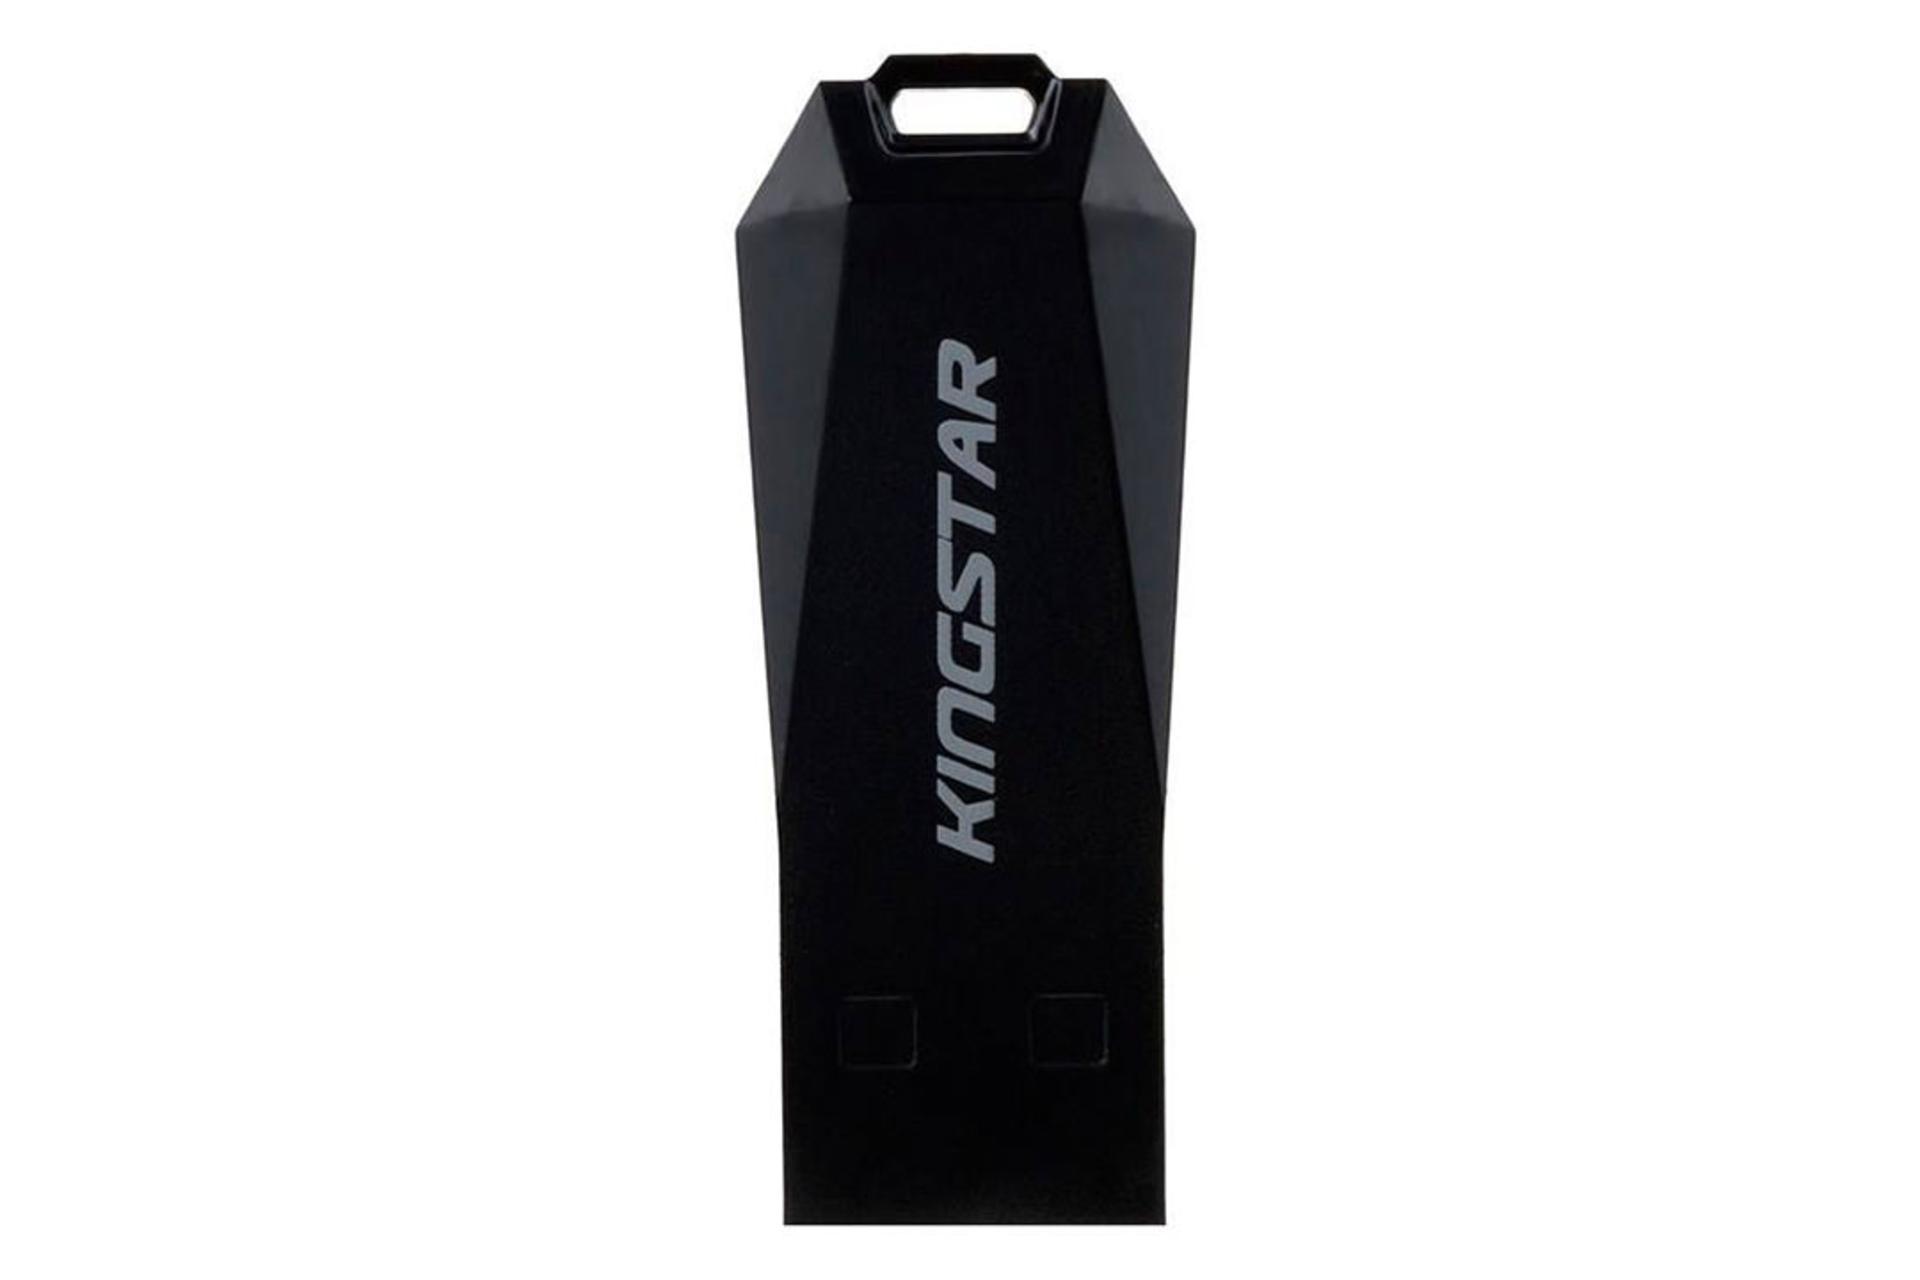 Kingstar Slider USB KS205